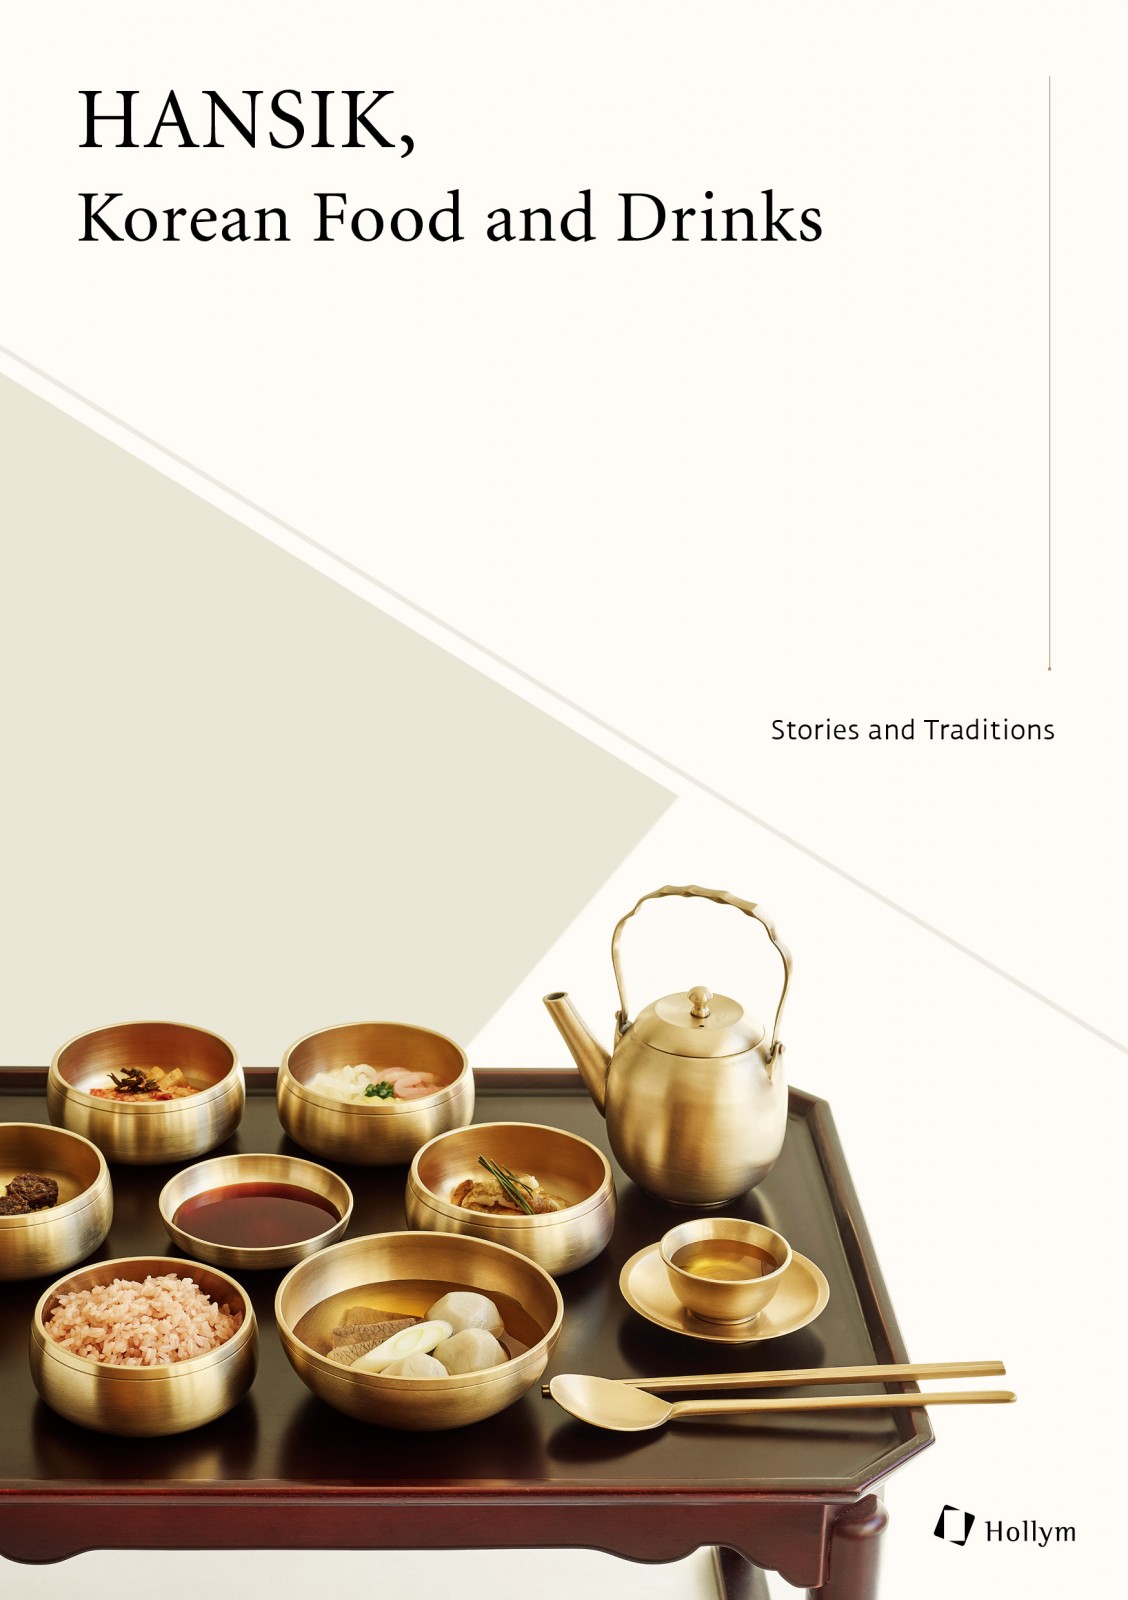 Hansik: Korean Food and Drinks